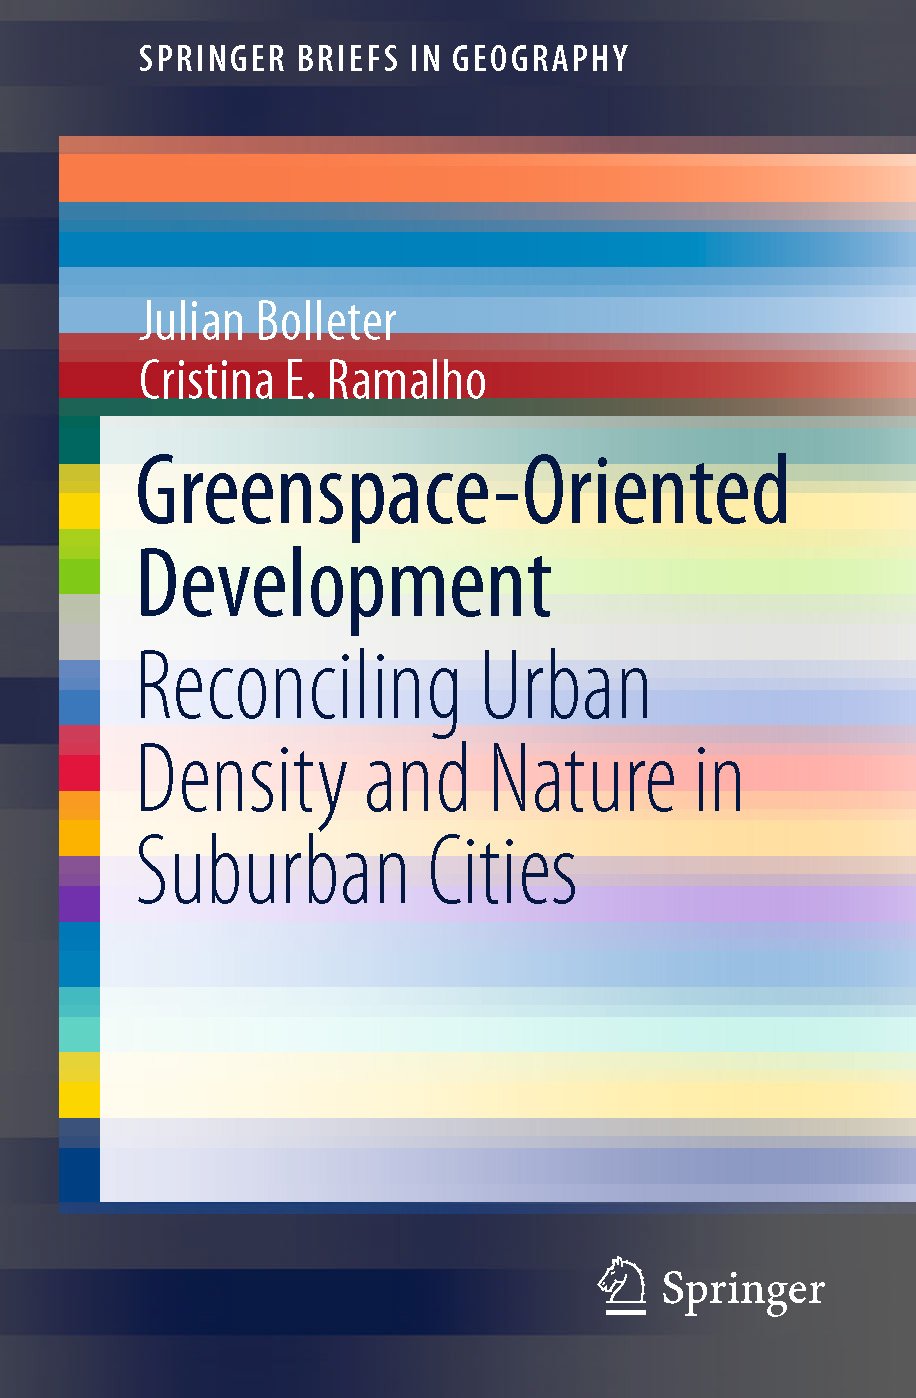 2019_Greenspace-Oriented Development.jpg